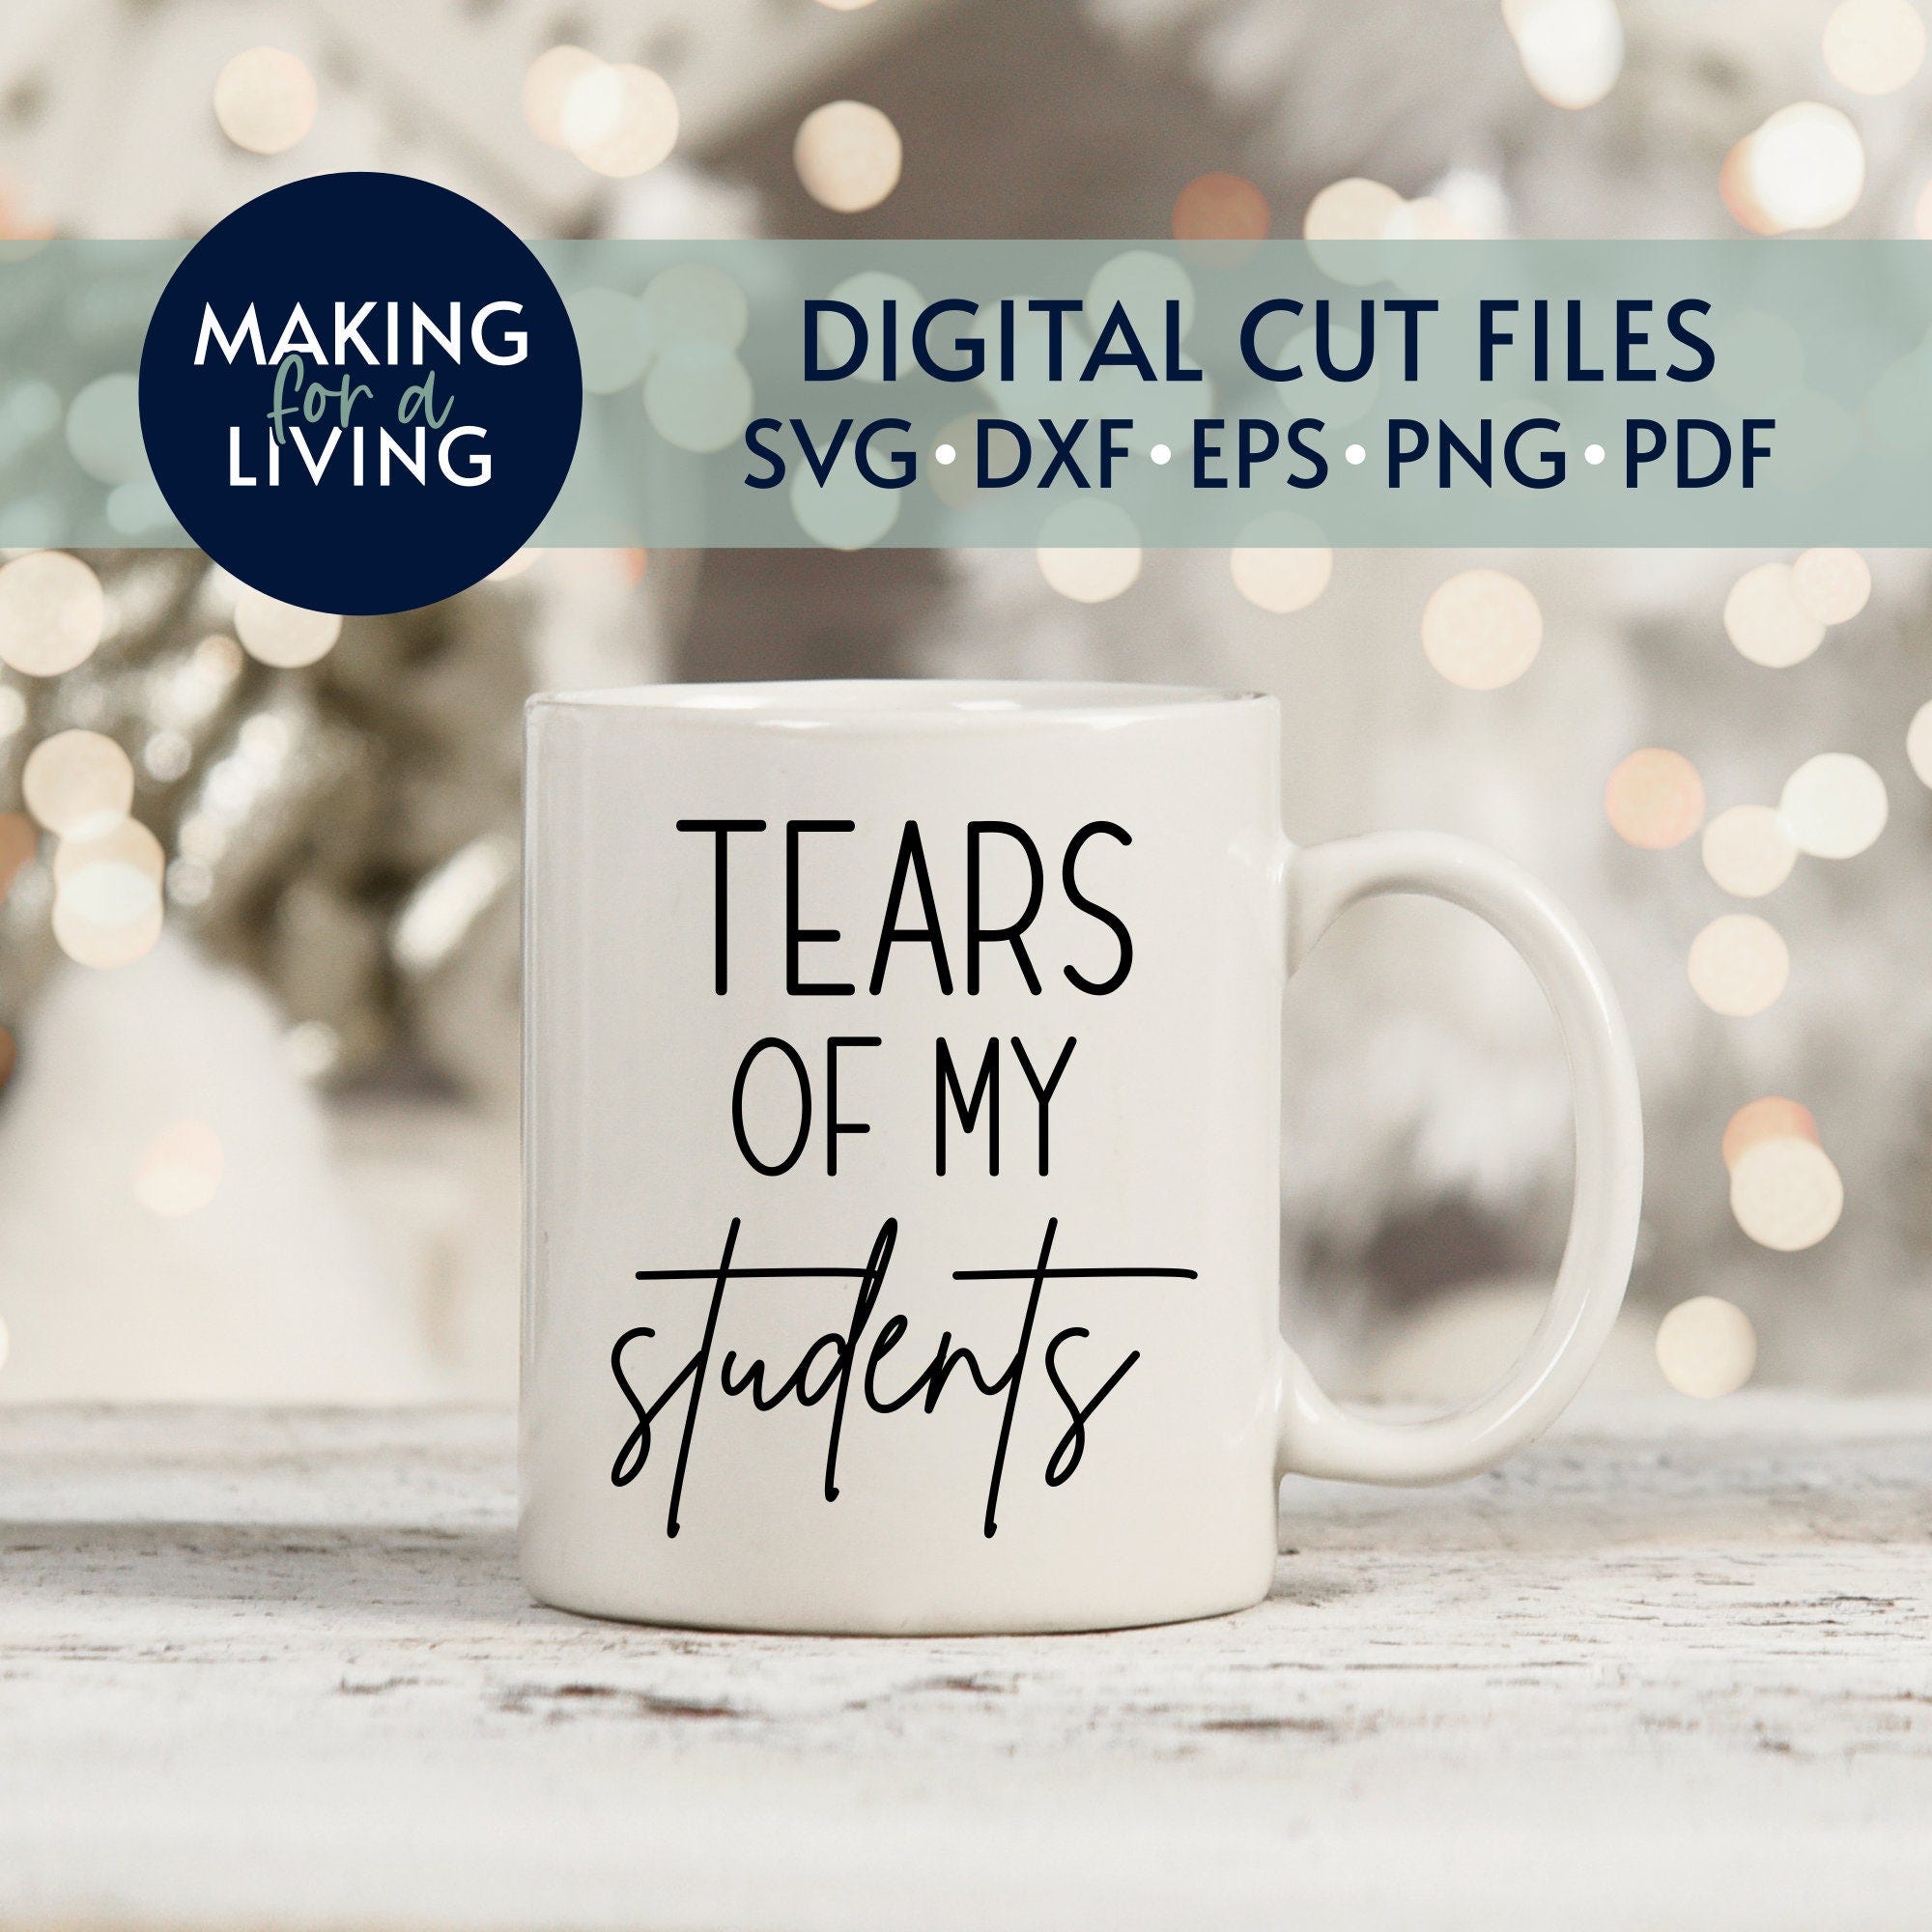 Tears of my Students - SVG Cut File | Digital cut files for Cricut, Silhouette, dxf, eps, pdf | coffee mug svg, teacher svg, teacher mug